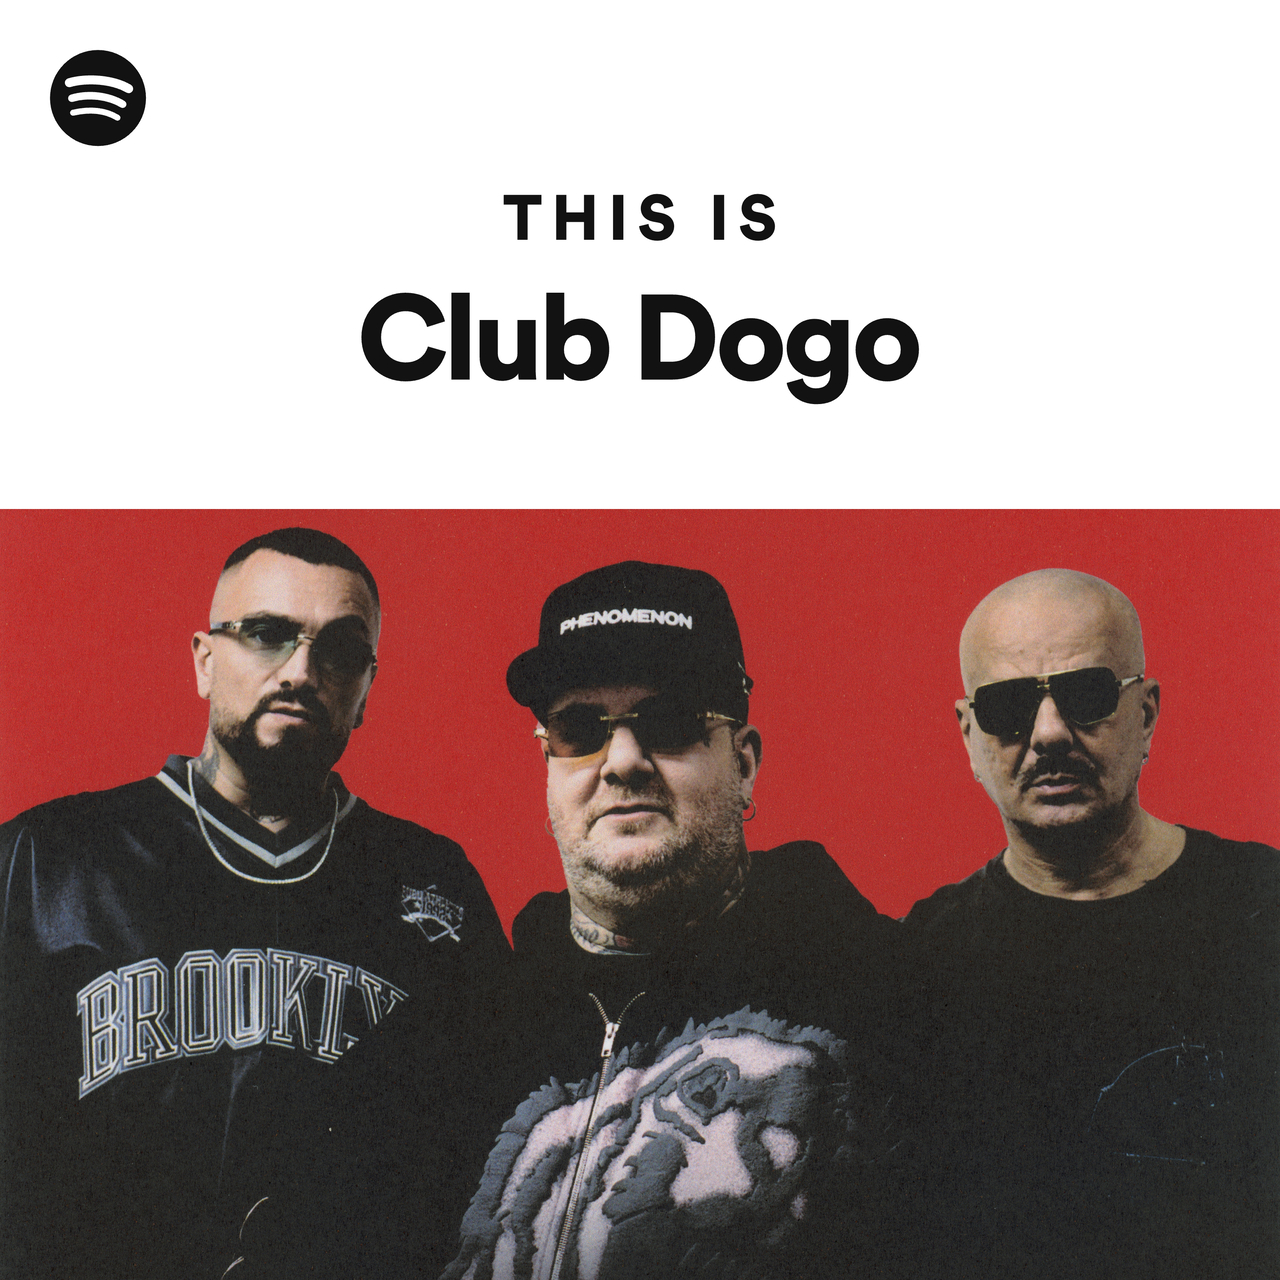 This Is Club Dogo - playlist by Spotify